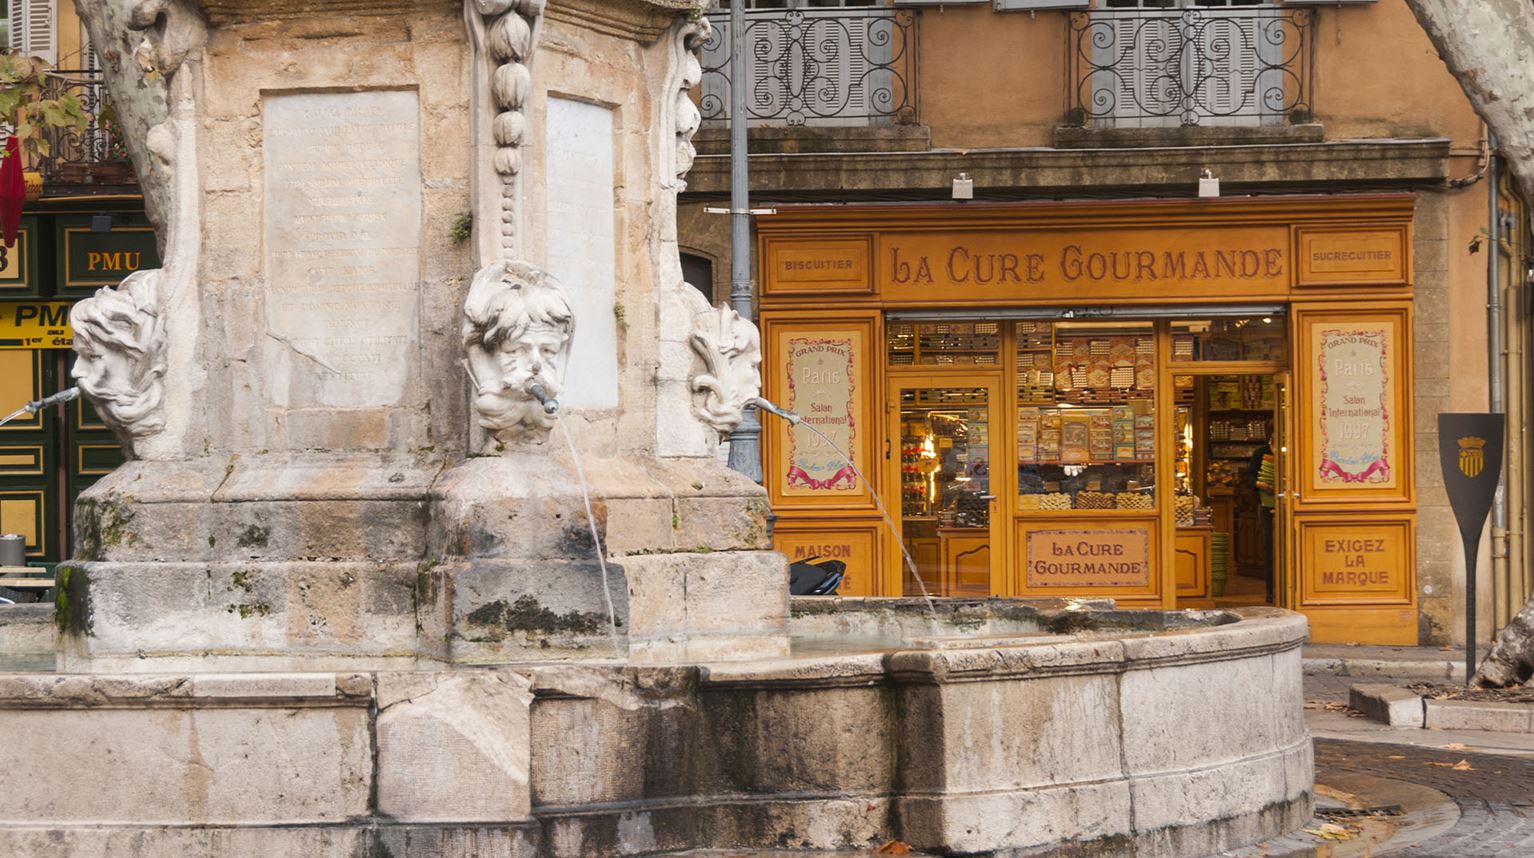 Ornate stone fountain outside a gourmet shop. 